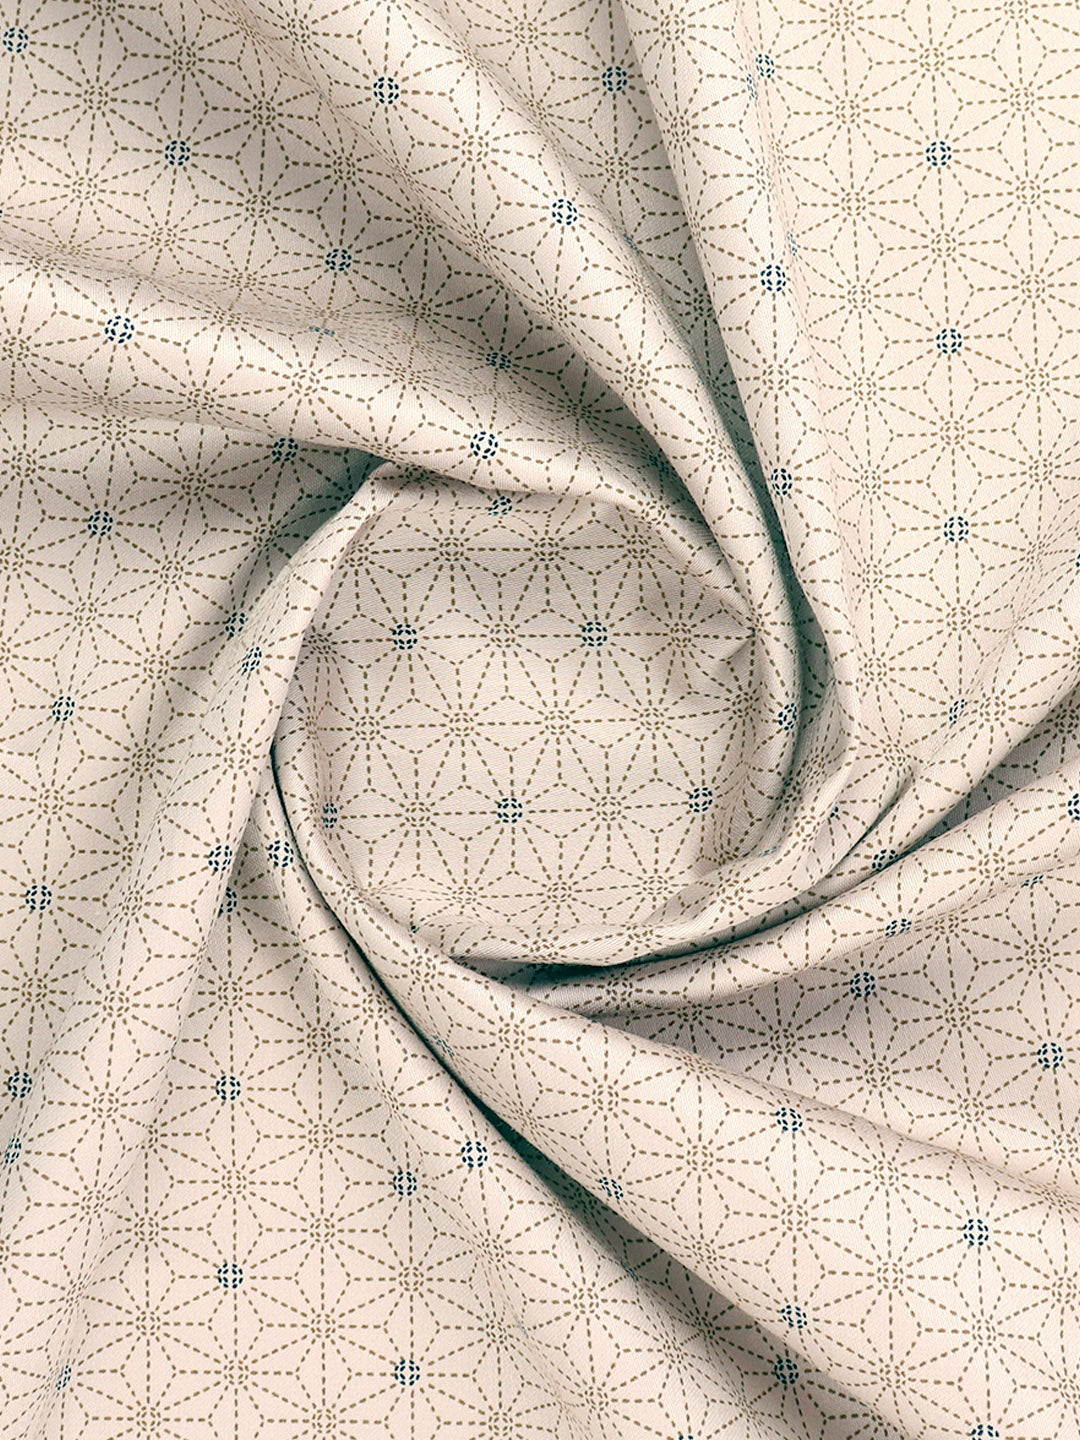 Cotton Blend Sandal Colour All-over Print Shirt Fabric ALPHA